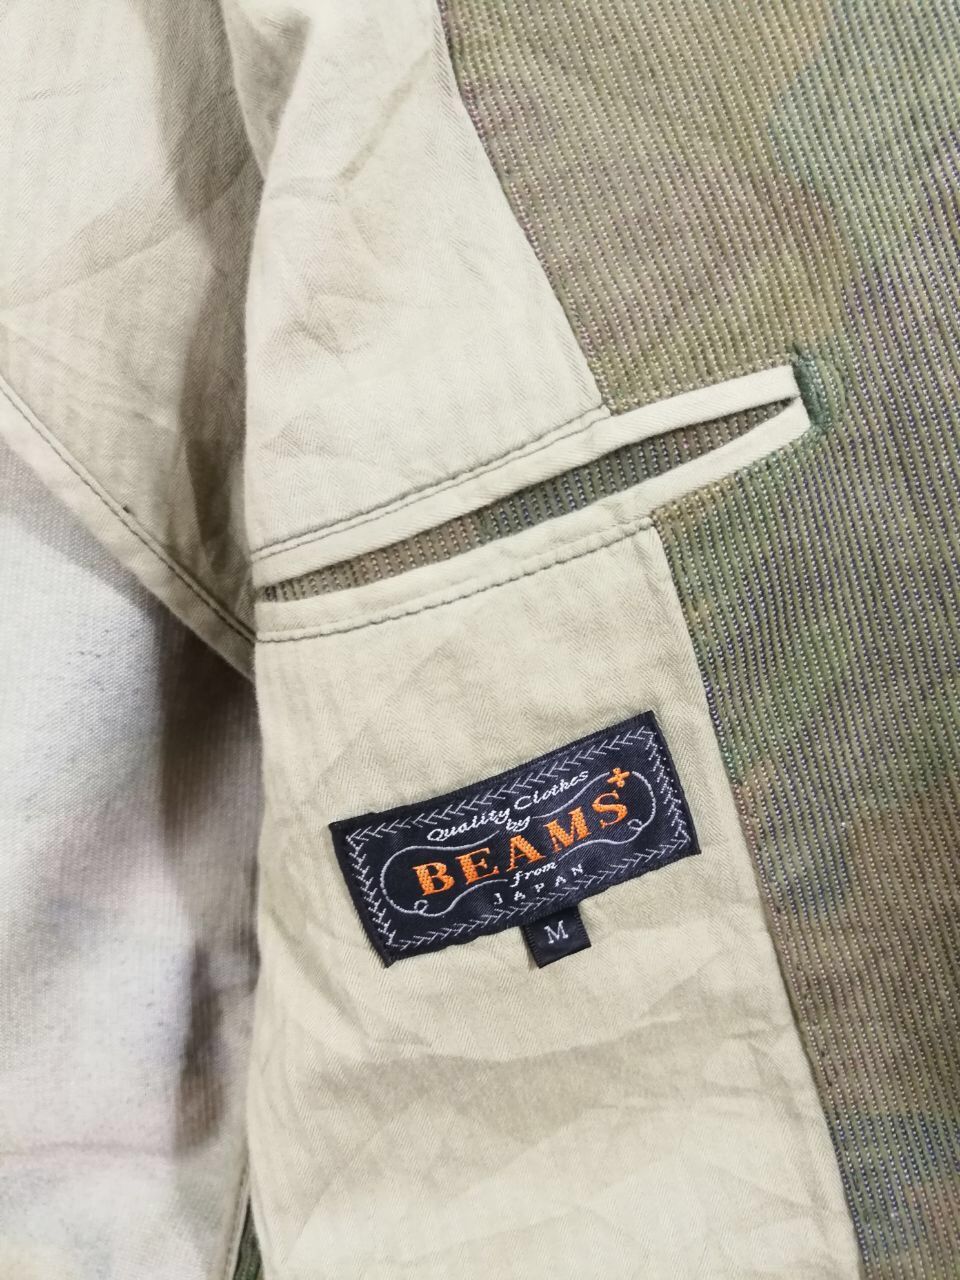 Beams Plus Camouflage Jacket Nice Color Design - 5